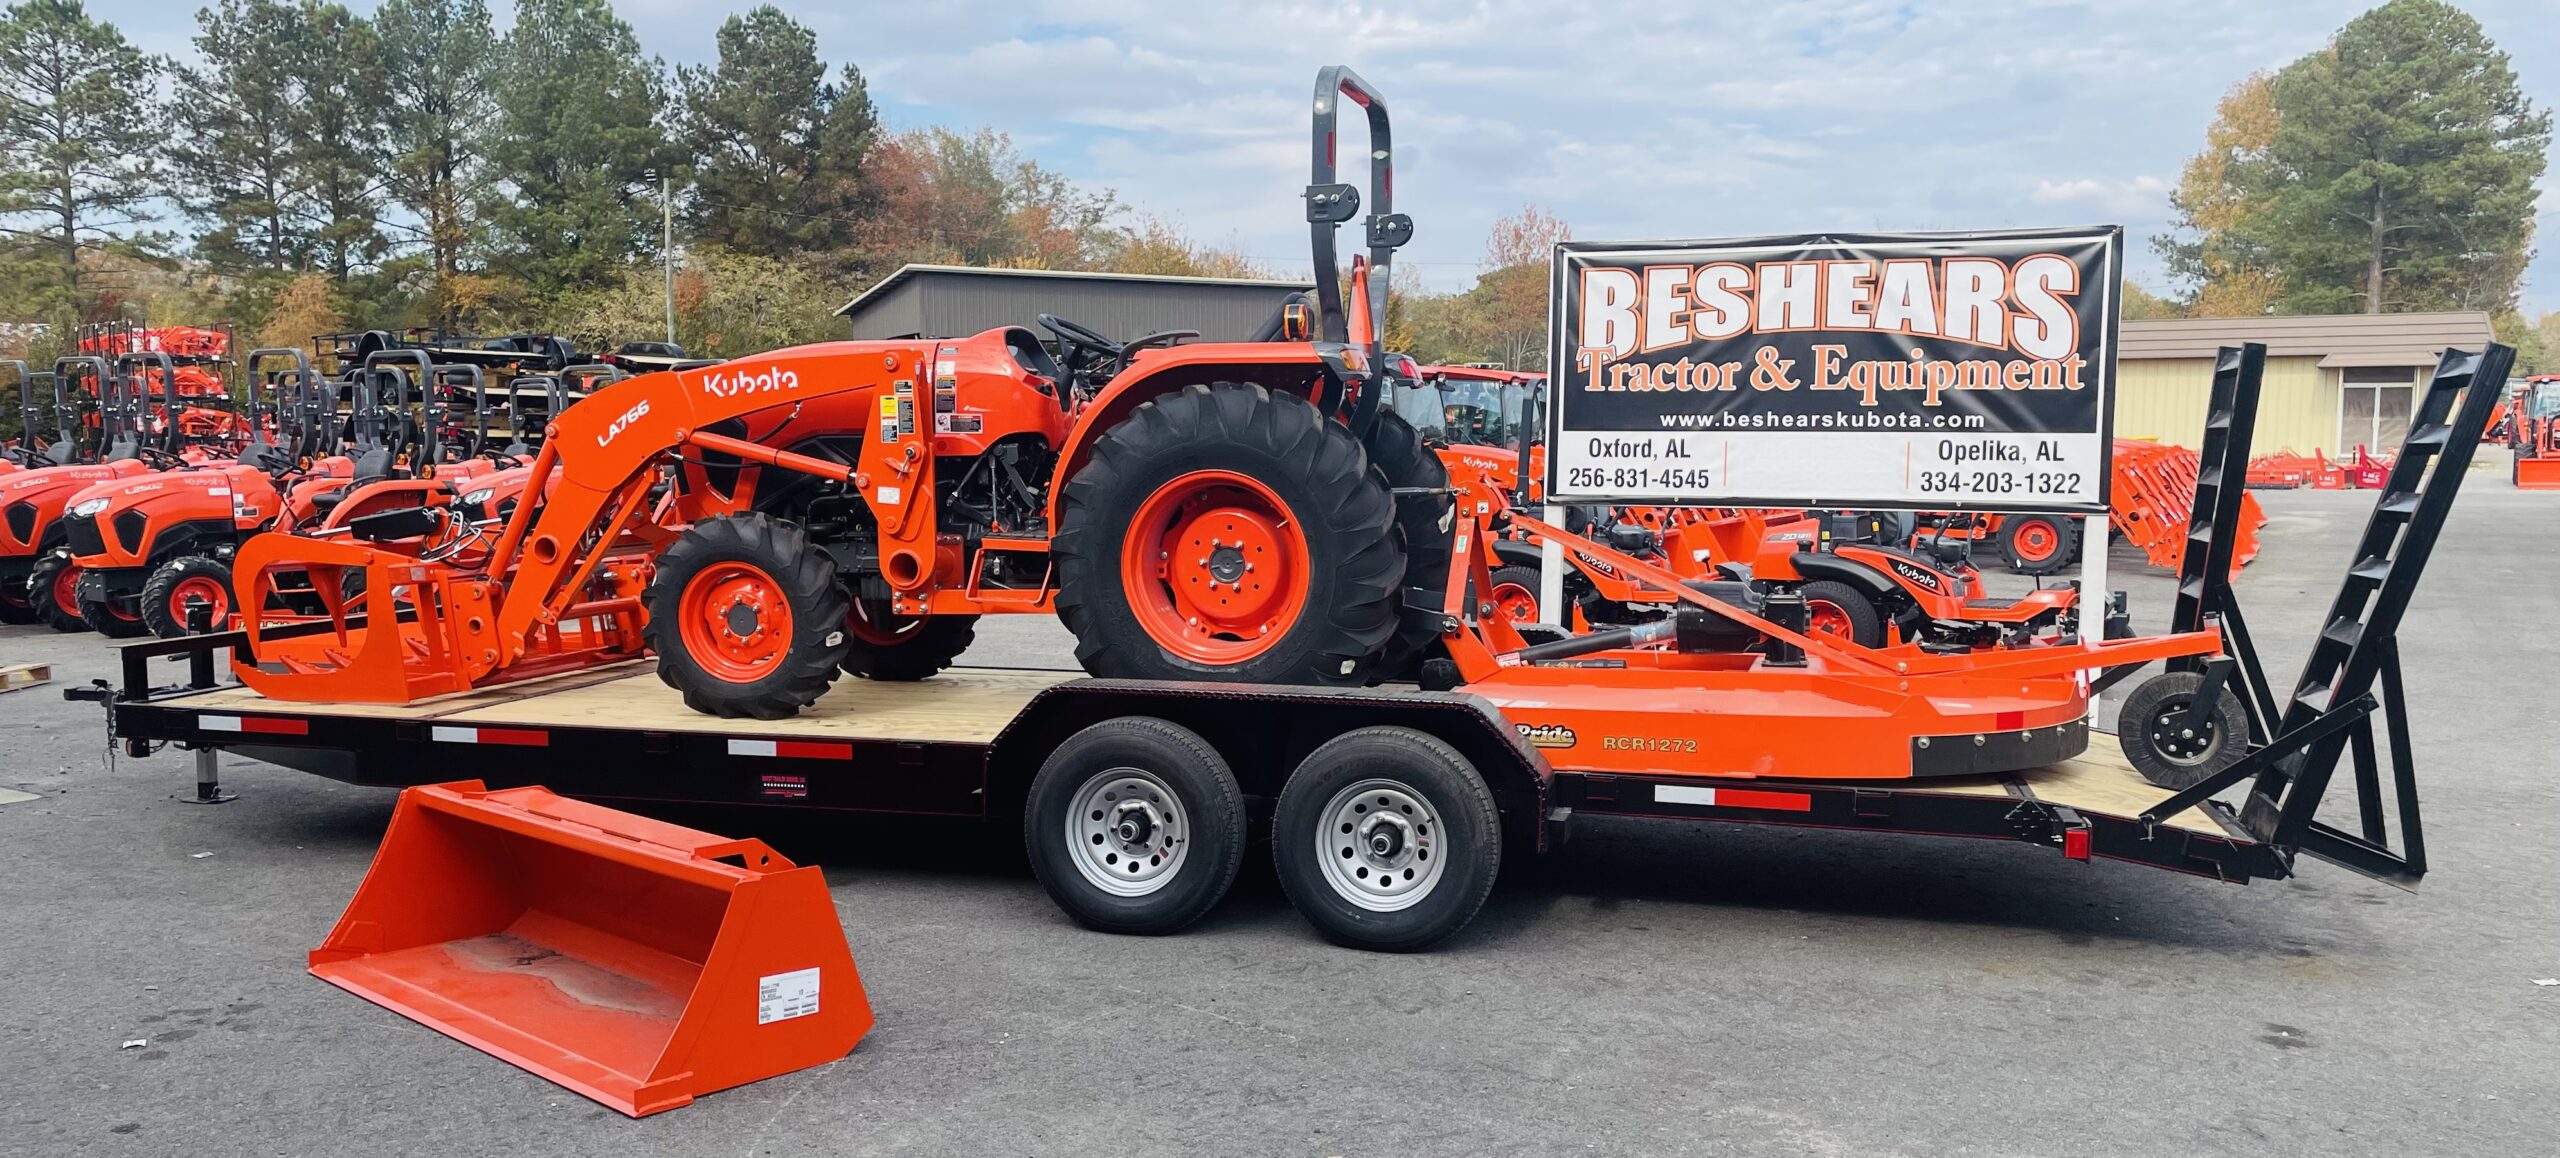 Tractor Package Deals - Beshears Tractor & Equipment